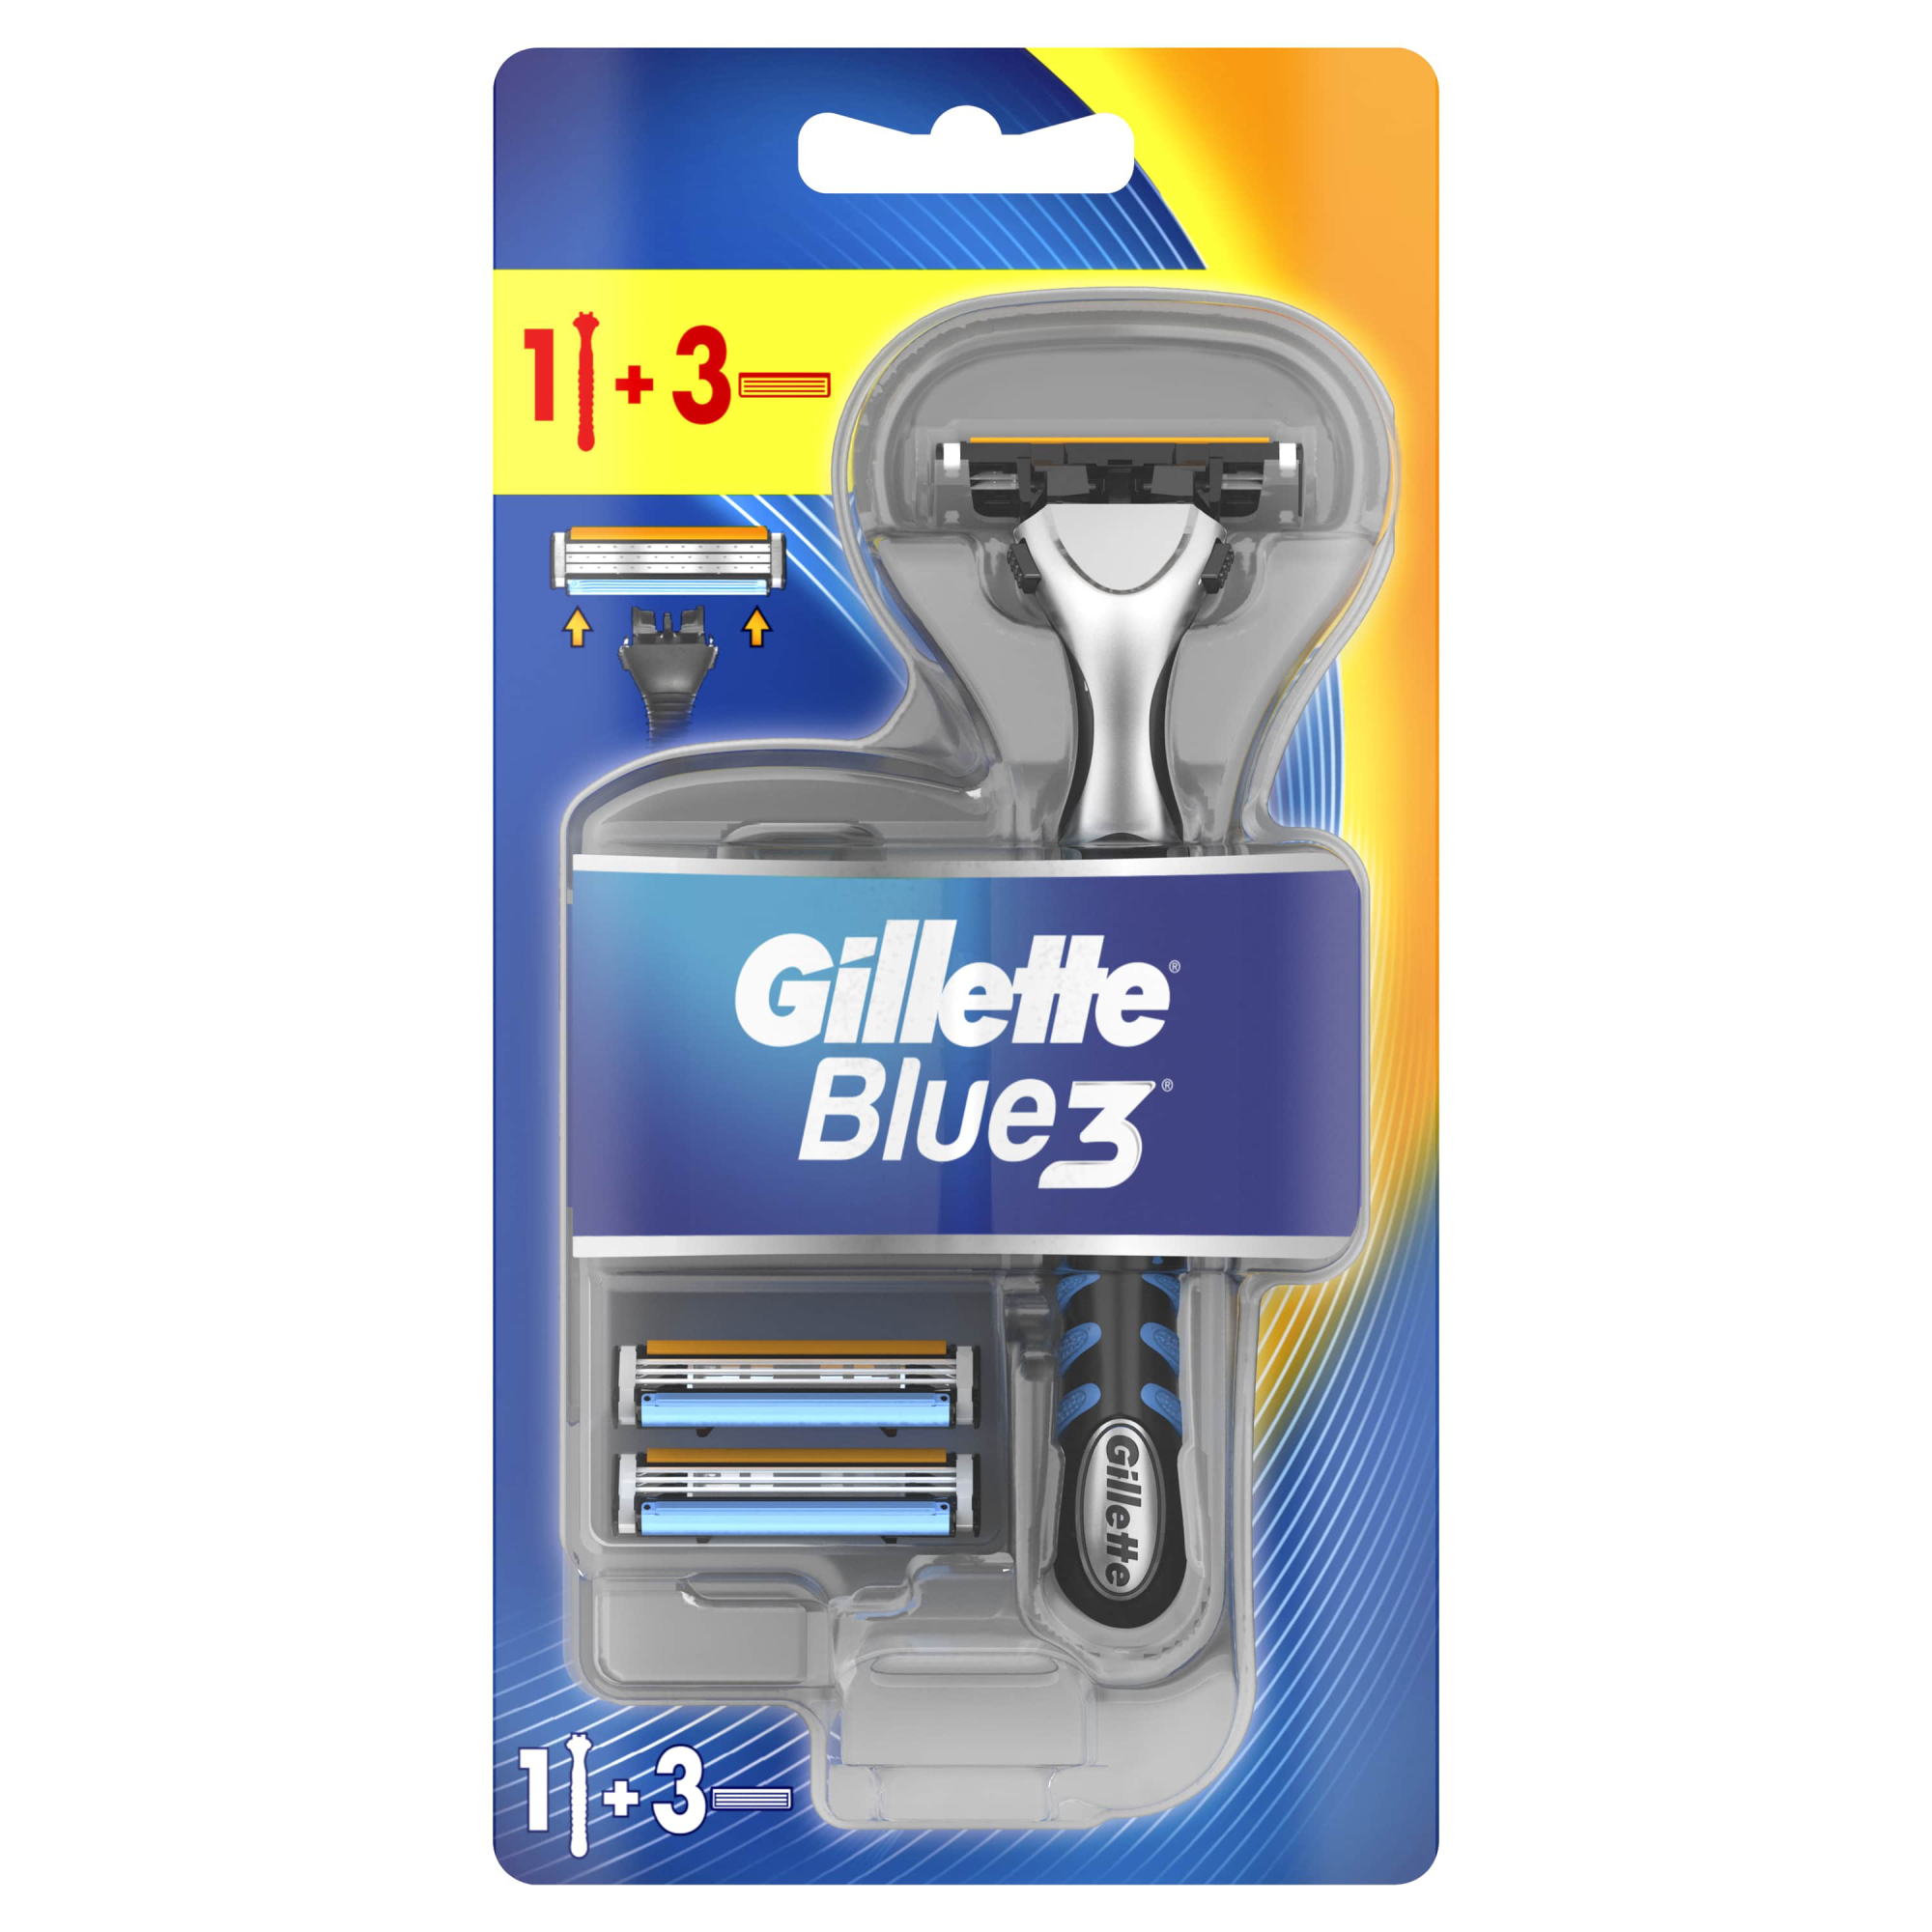 Мужская бритва Gillette Blue3, 3 кассеты, с 3 лезвиями, плавающая головка мужская бритва gillette blue3 3 кассеты с 3 лезвиями плавающая головка